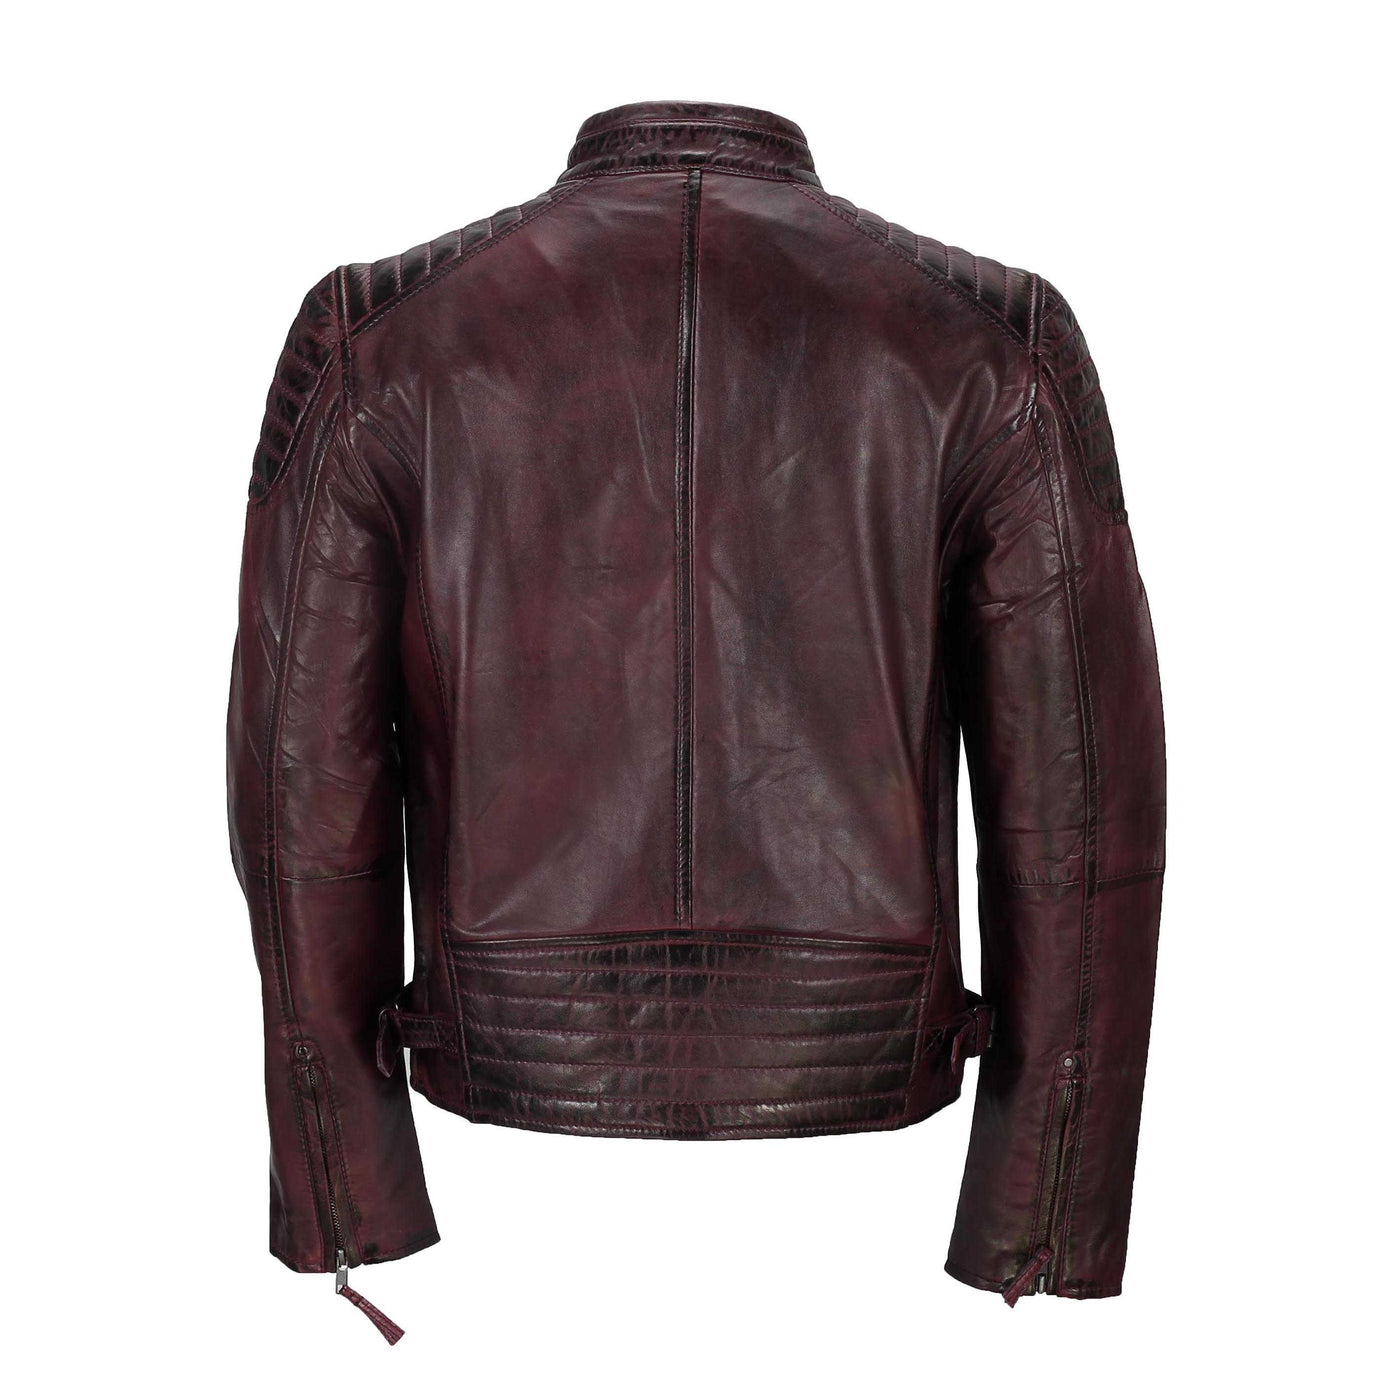 Mens Real Leather Biker Jacket In Washed Antiqued Maroon Vintage Slim Fitted